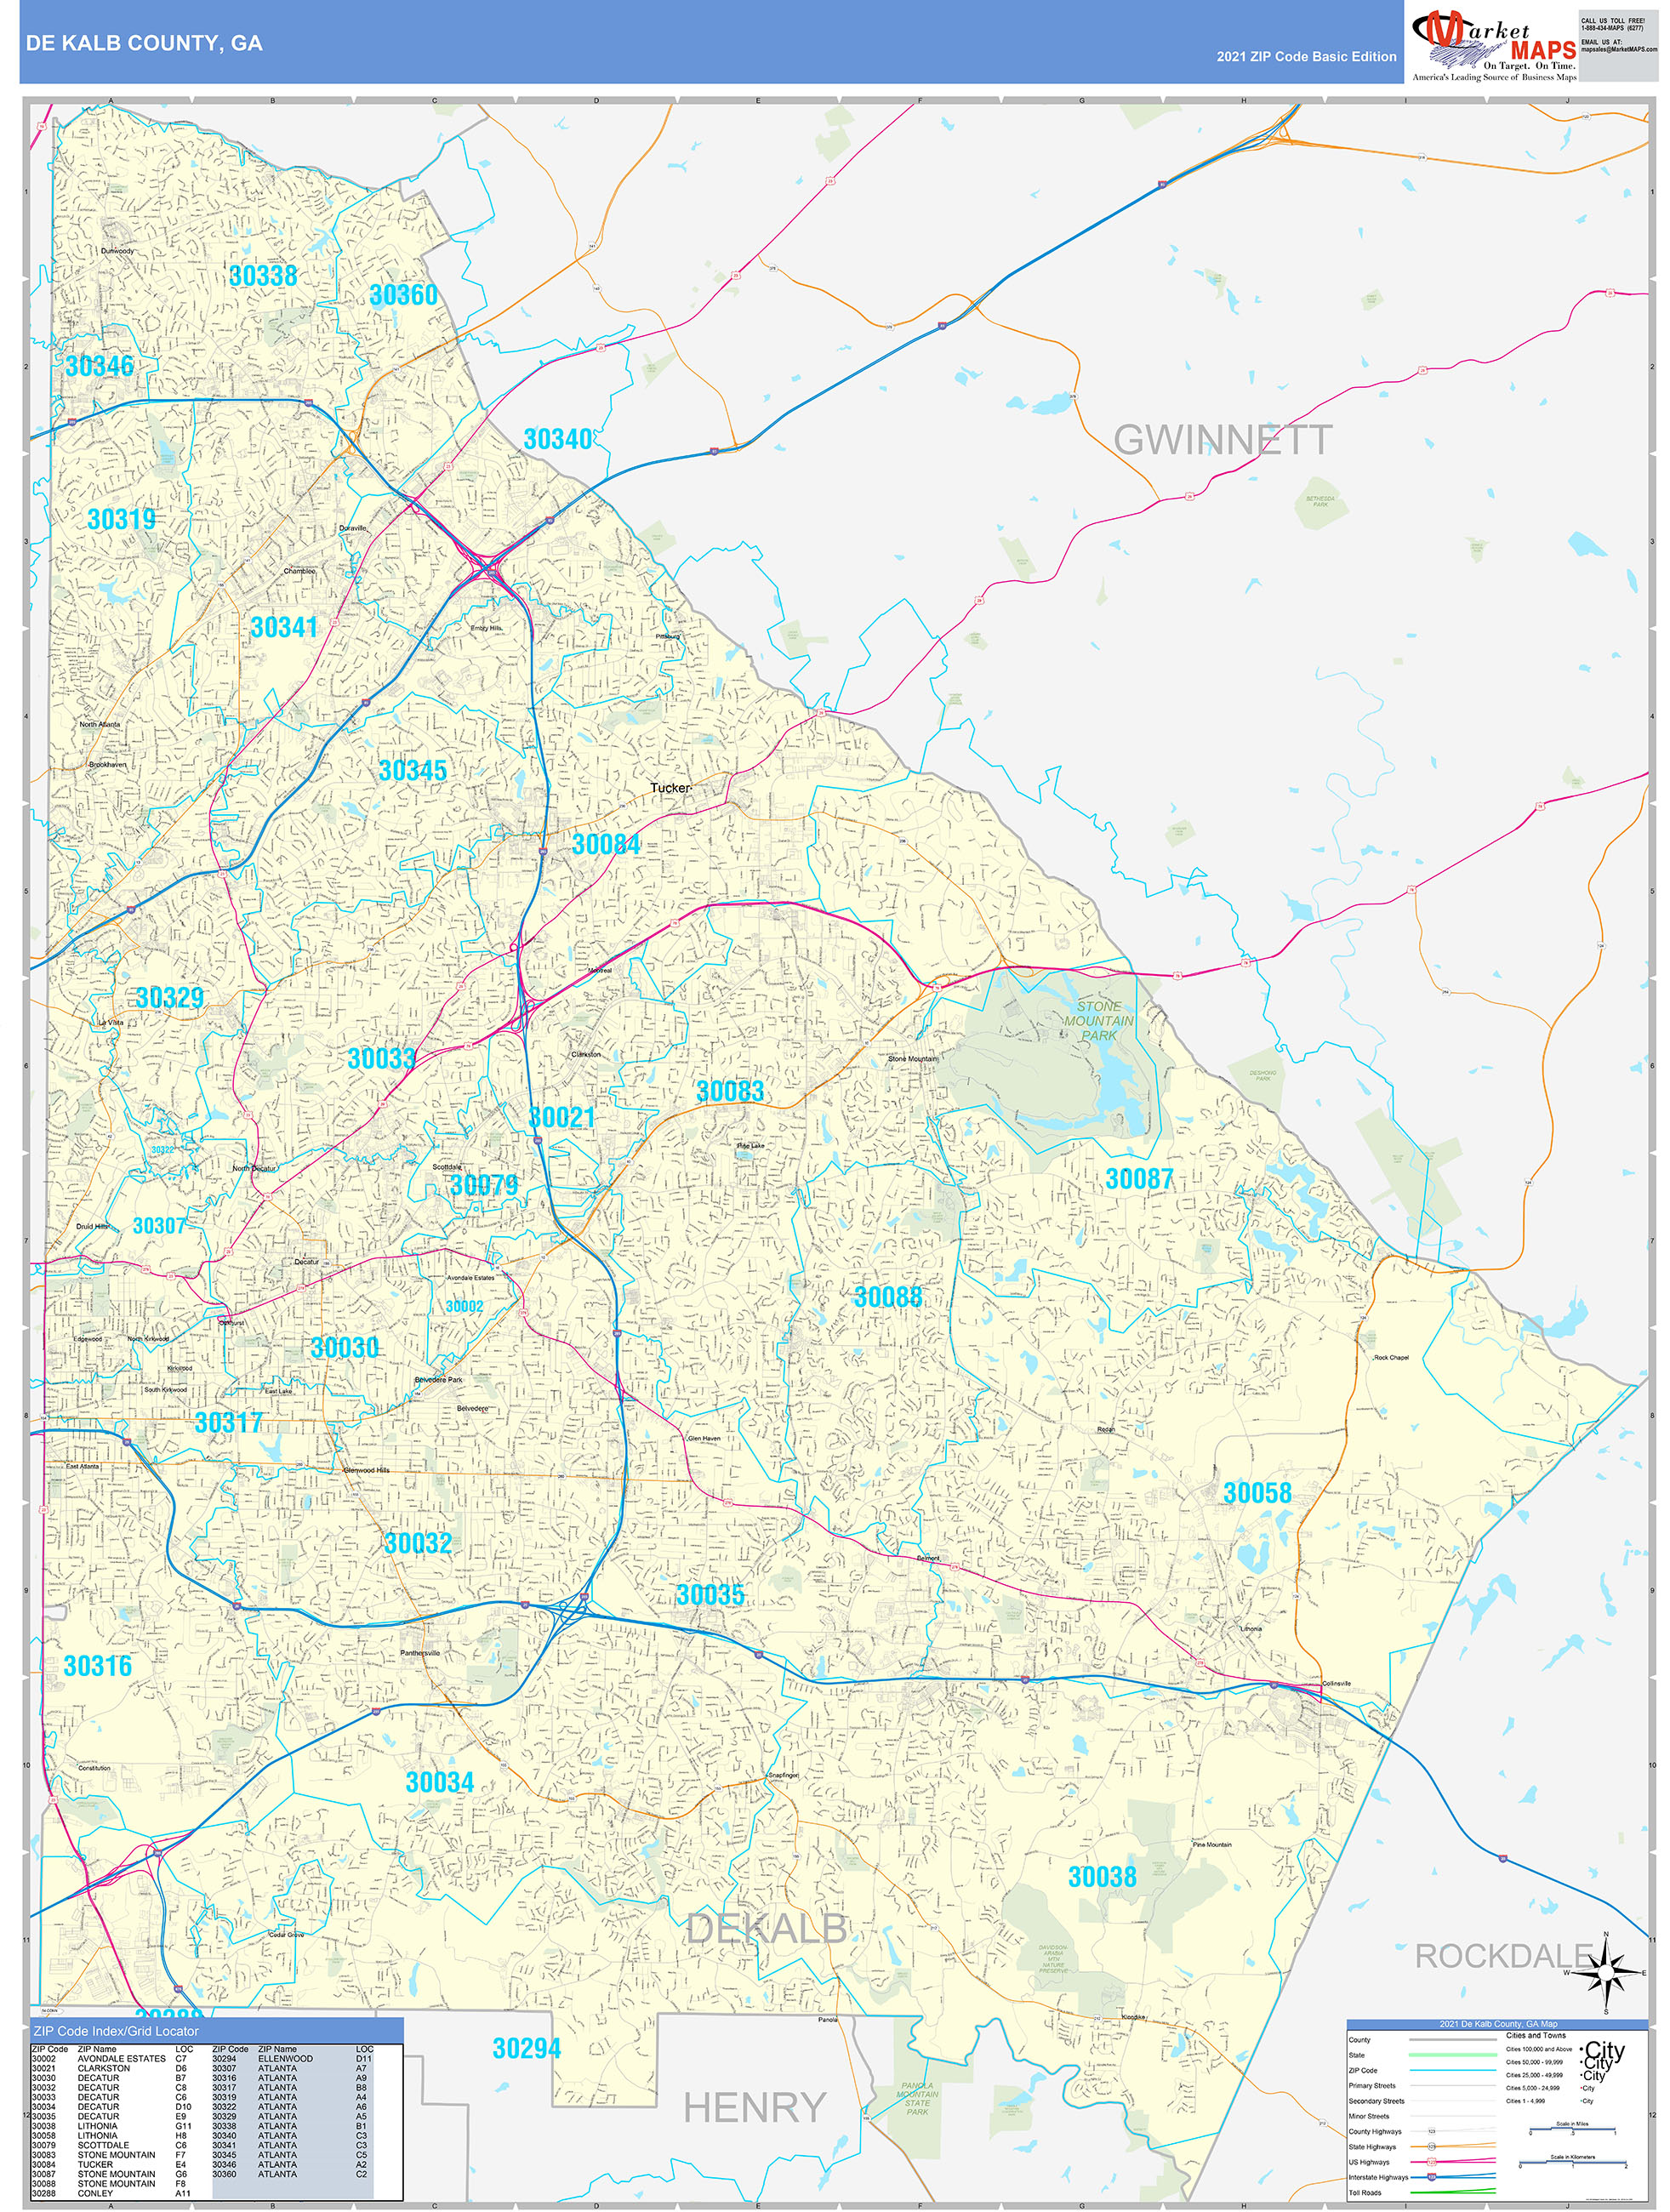 DeKalb County, GA Zip Code Wall Map Basic Style by MarketMAPS - MapSales